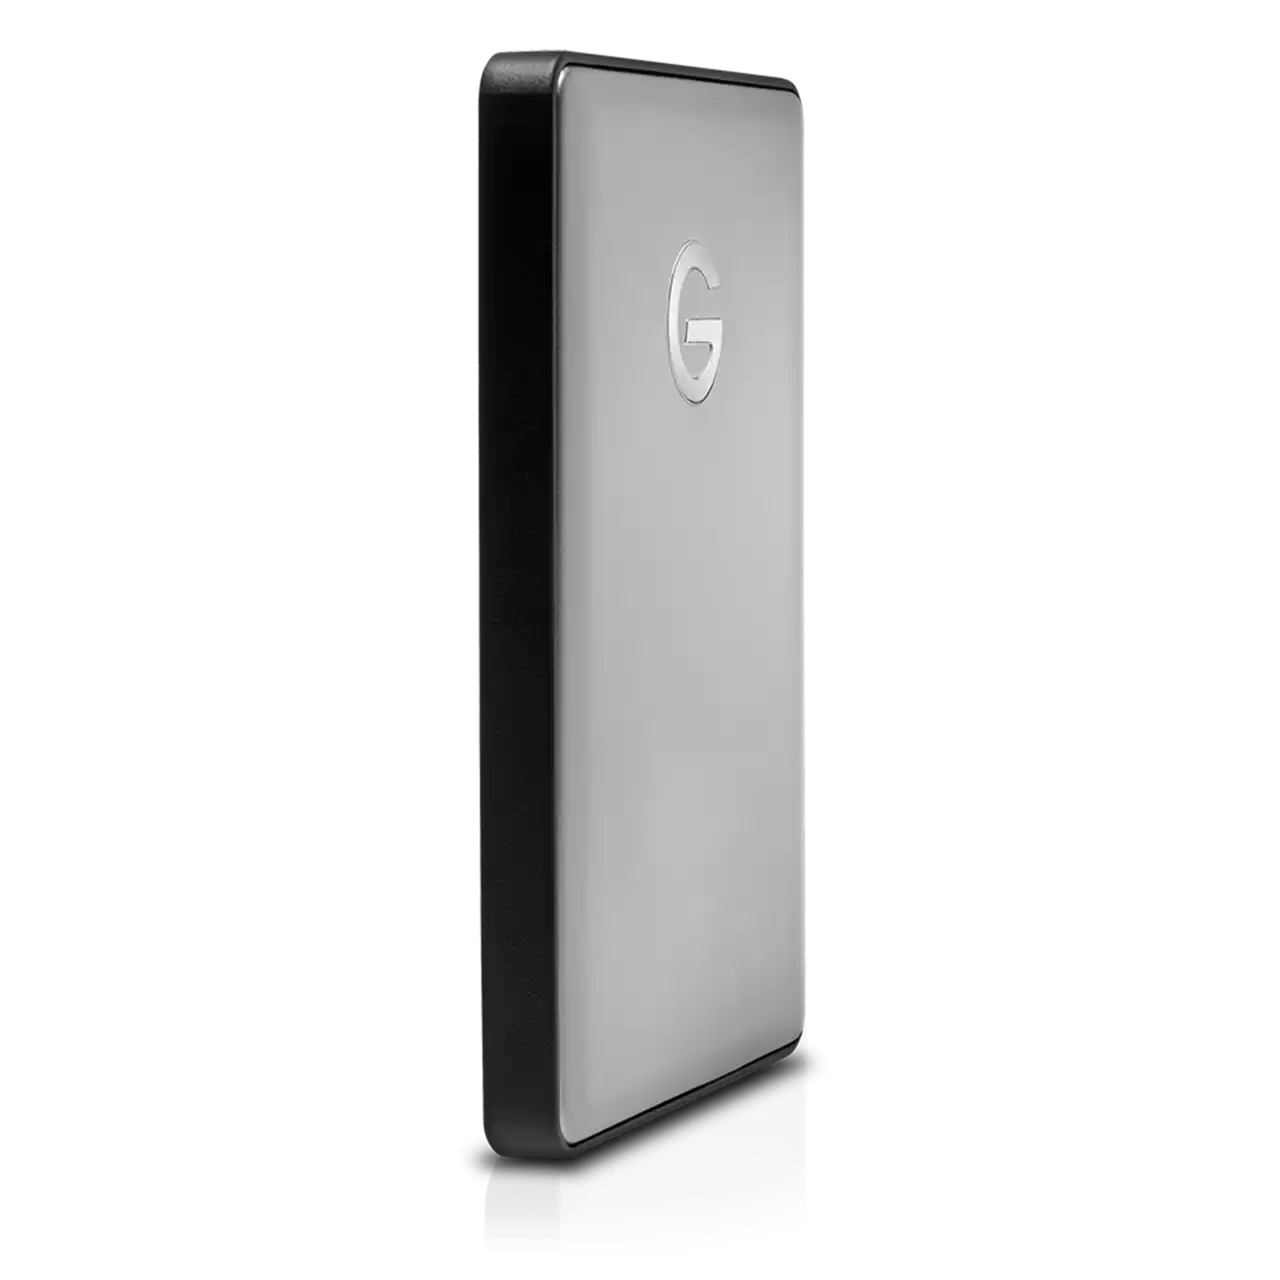 G-Technology 2TB G-DRIVE Mobile USB-C (USB 3.1 Gen 1), Portable External Hard Drive, Space Gray - 0G10317-1 - image 5 of 8